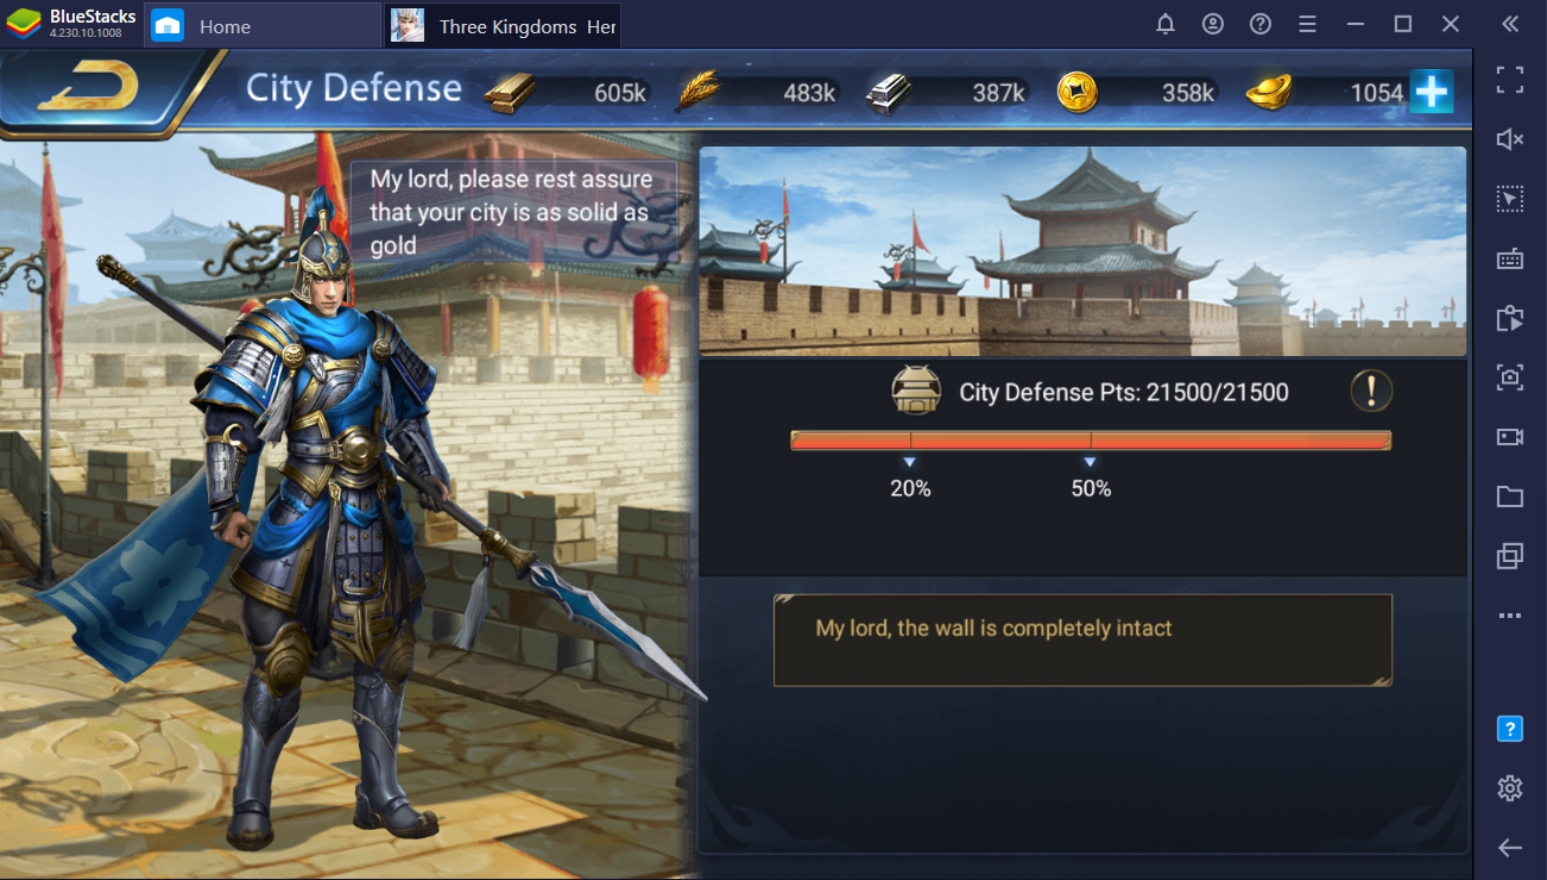 Three Kingdoms: Heroes Saga on PC - Military Guide